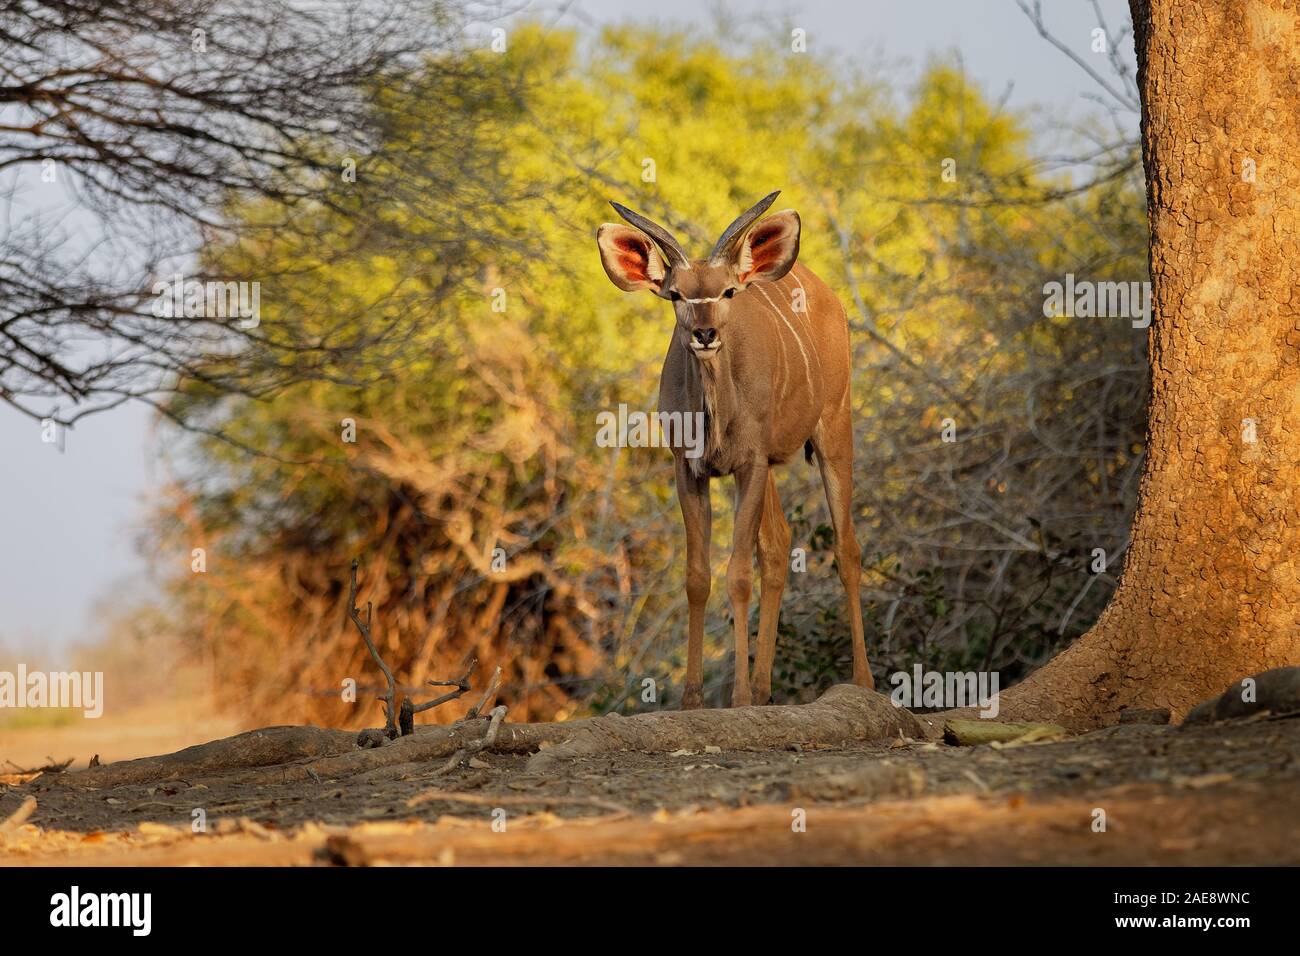 Greater Kudu - Tragelaphus strepsiceros woodland antelope found throughout eastern and southern Africa. Stock Photo